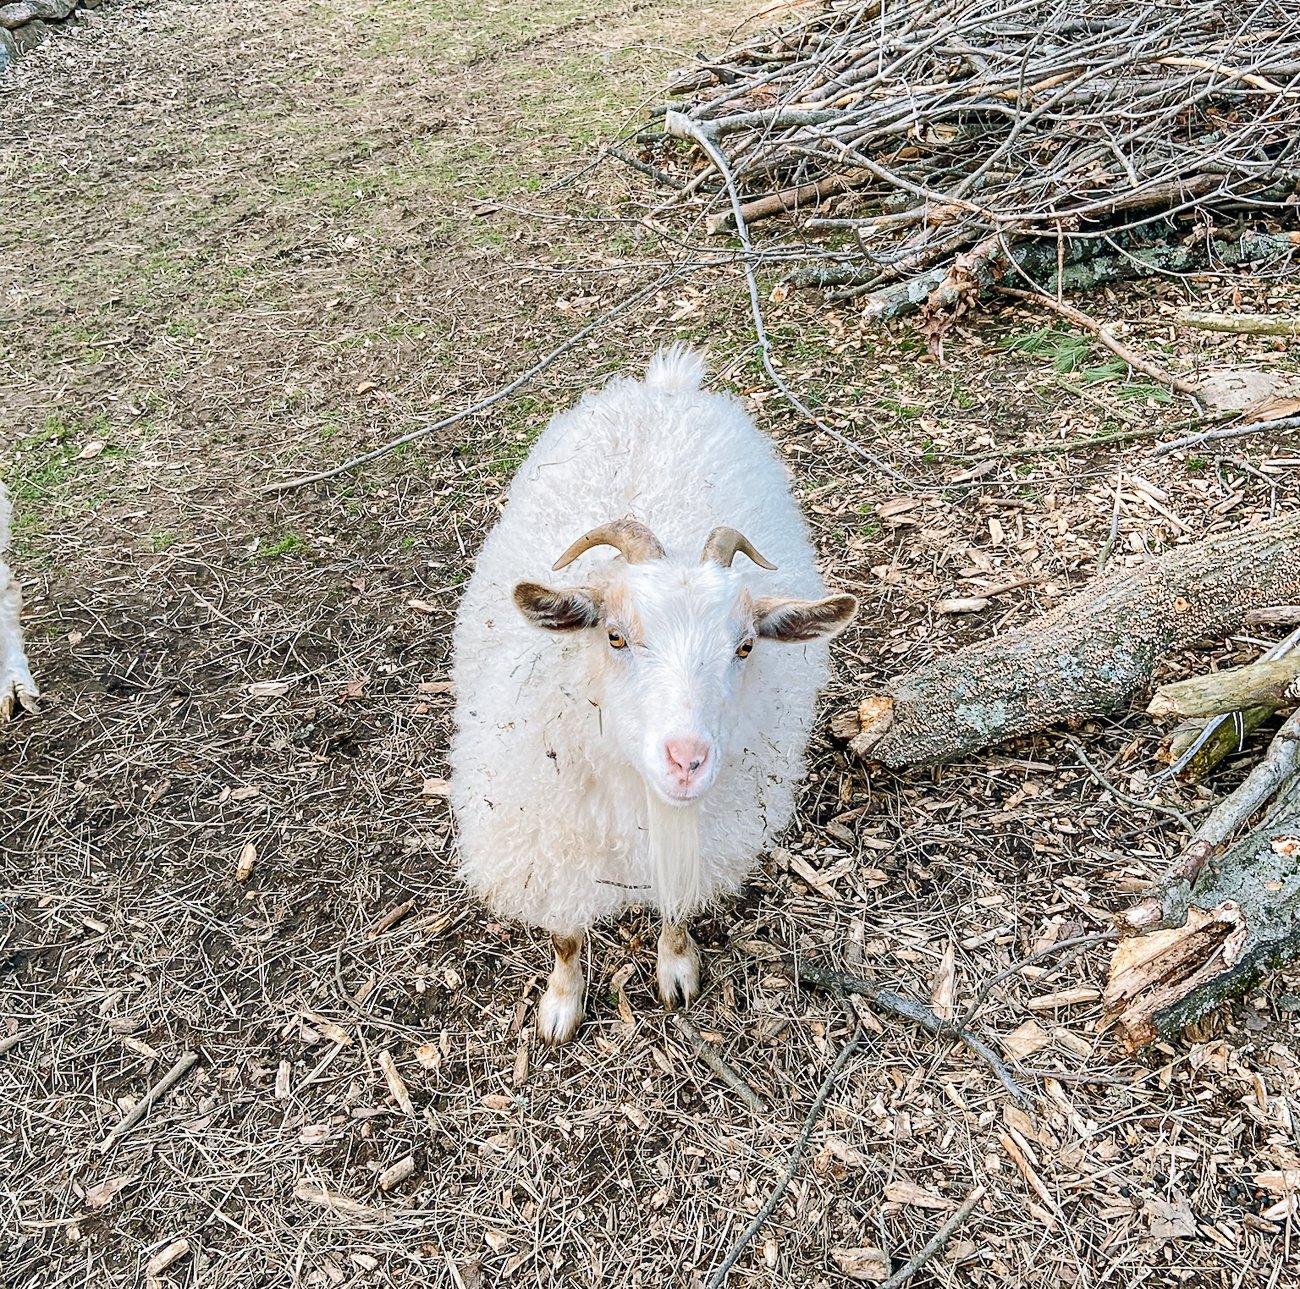 Danny the white pygora goat